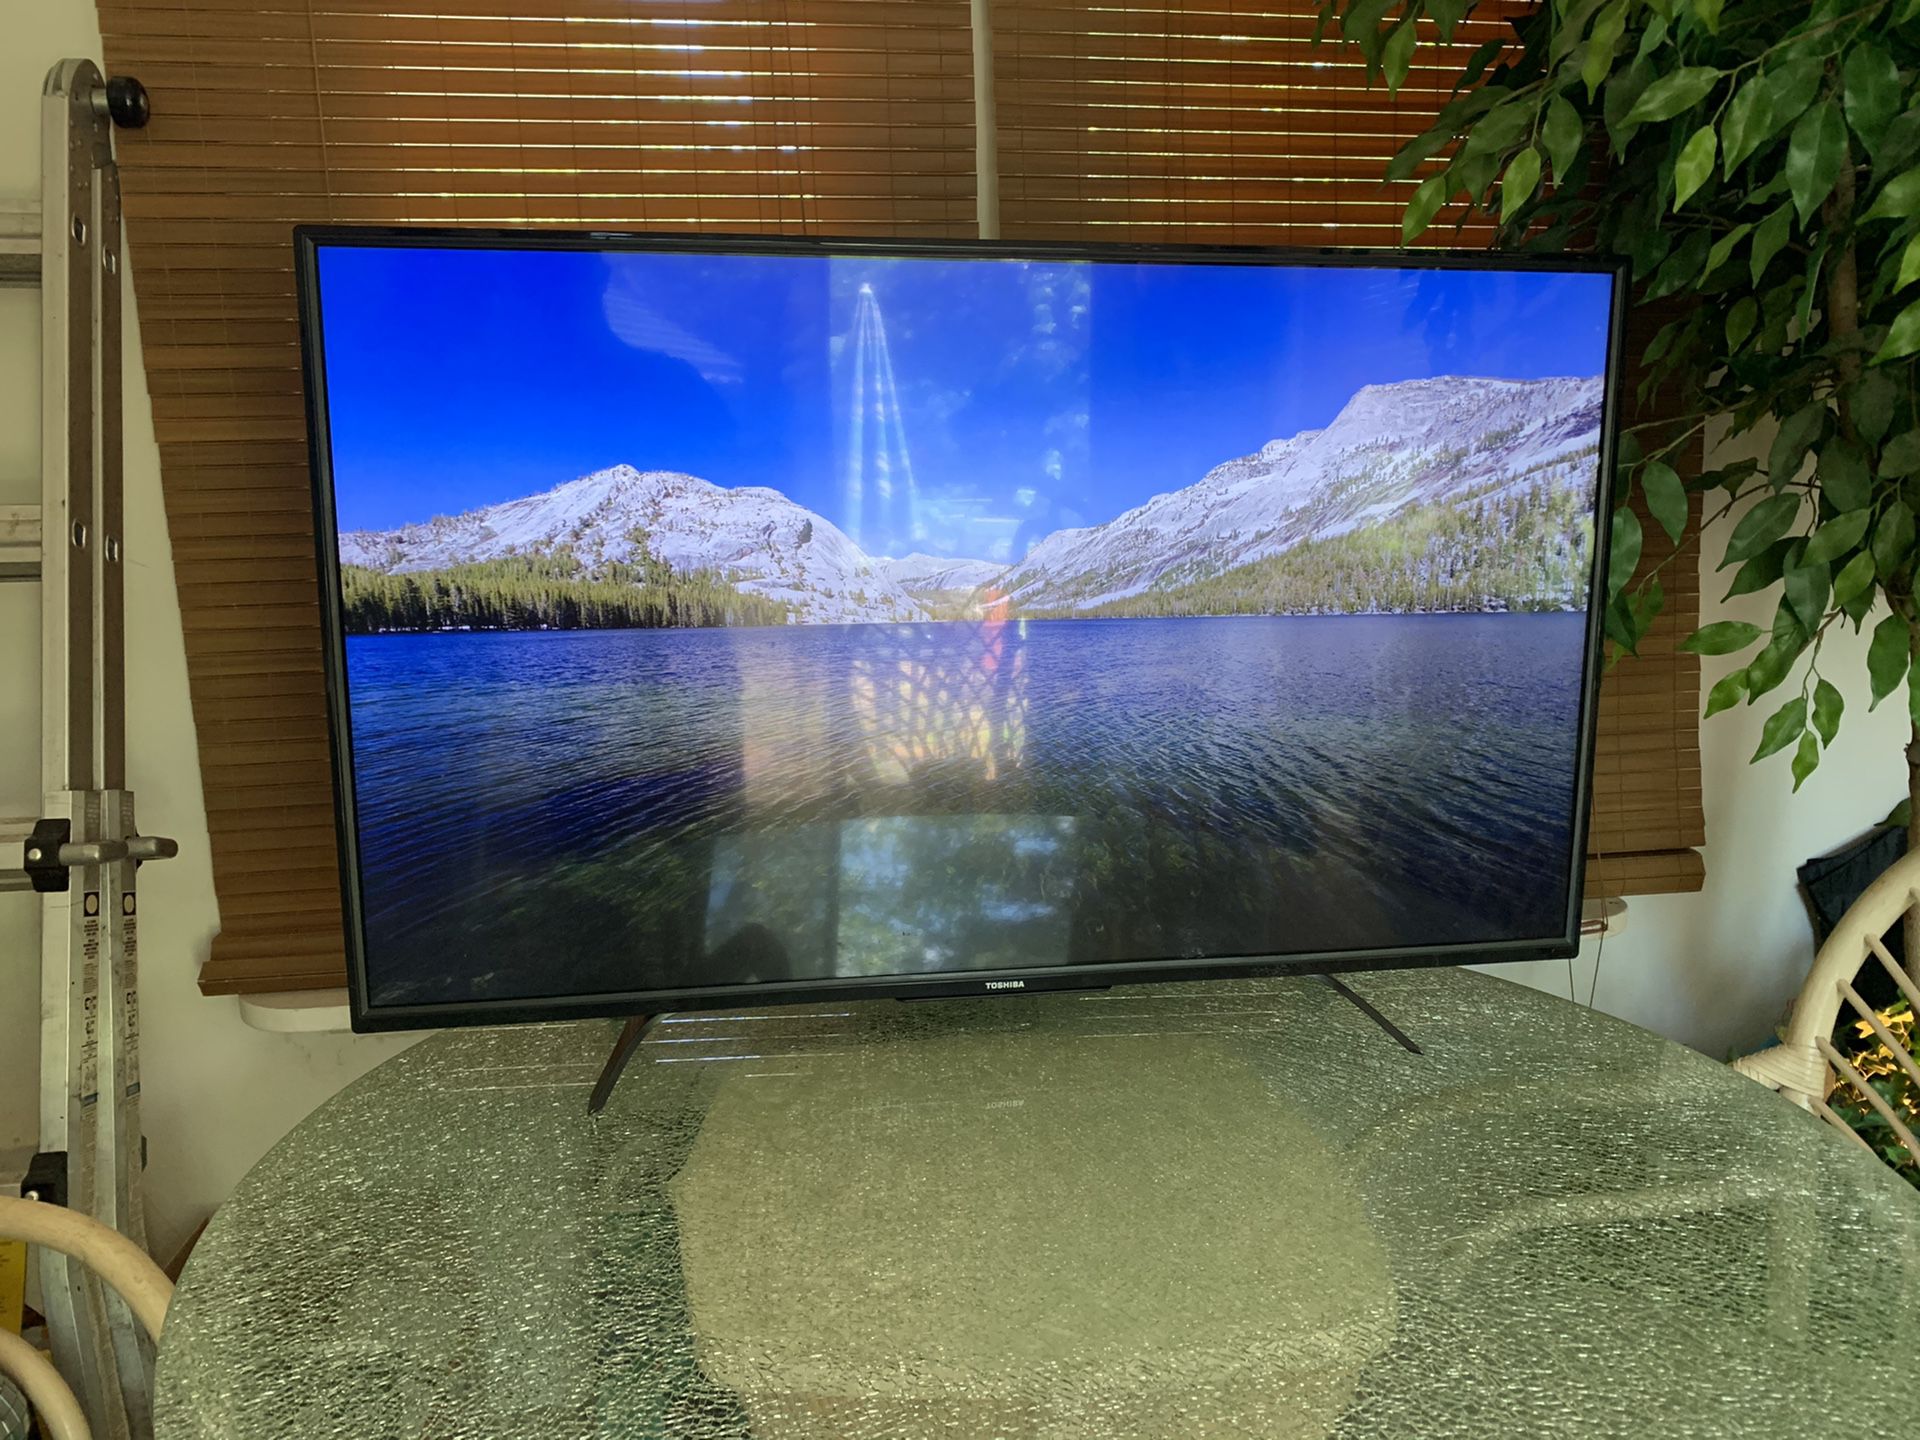 Toshiba 48” Inch Flat Screen TV